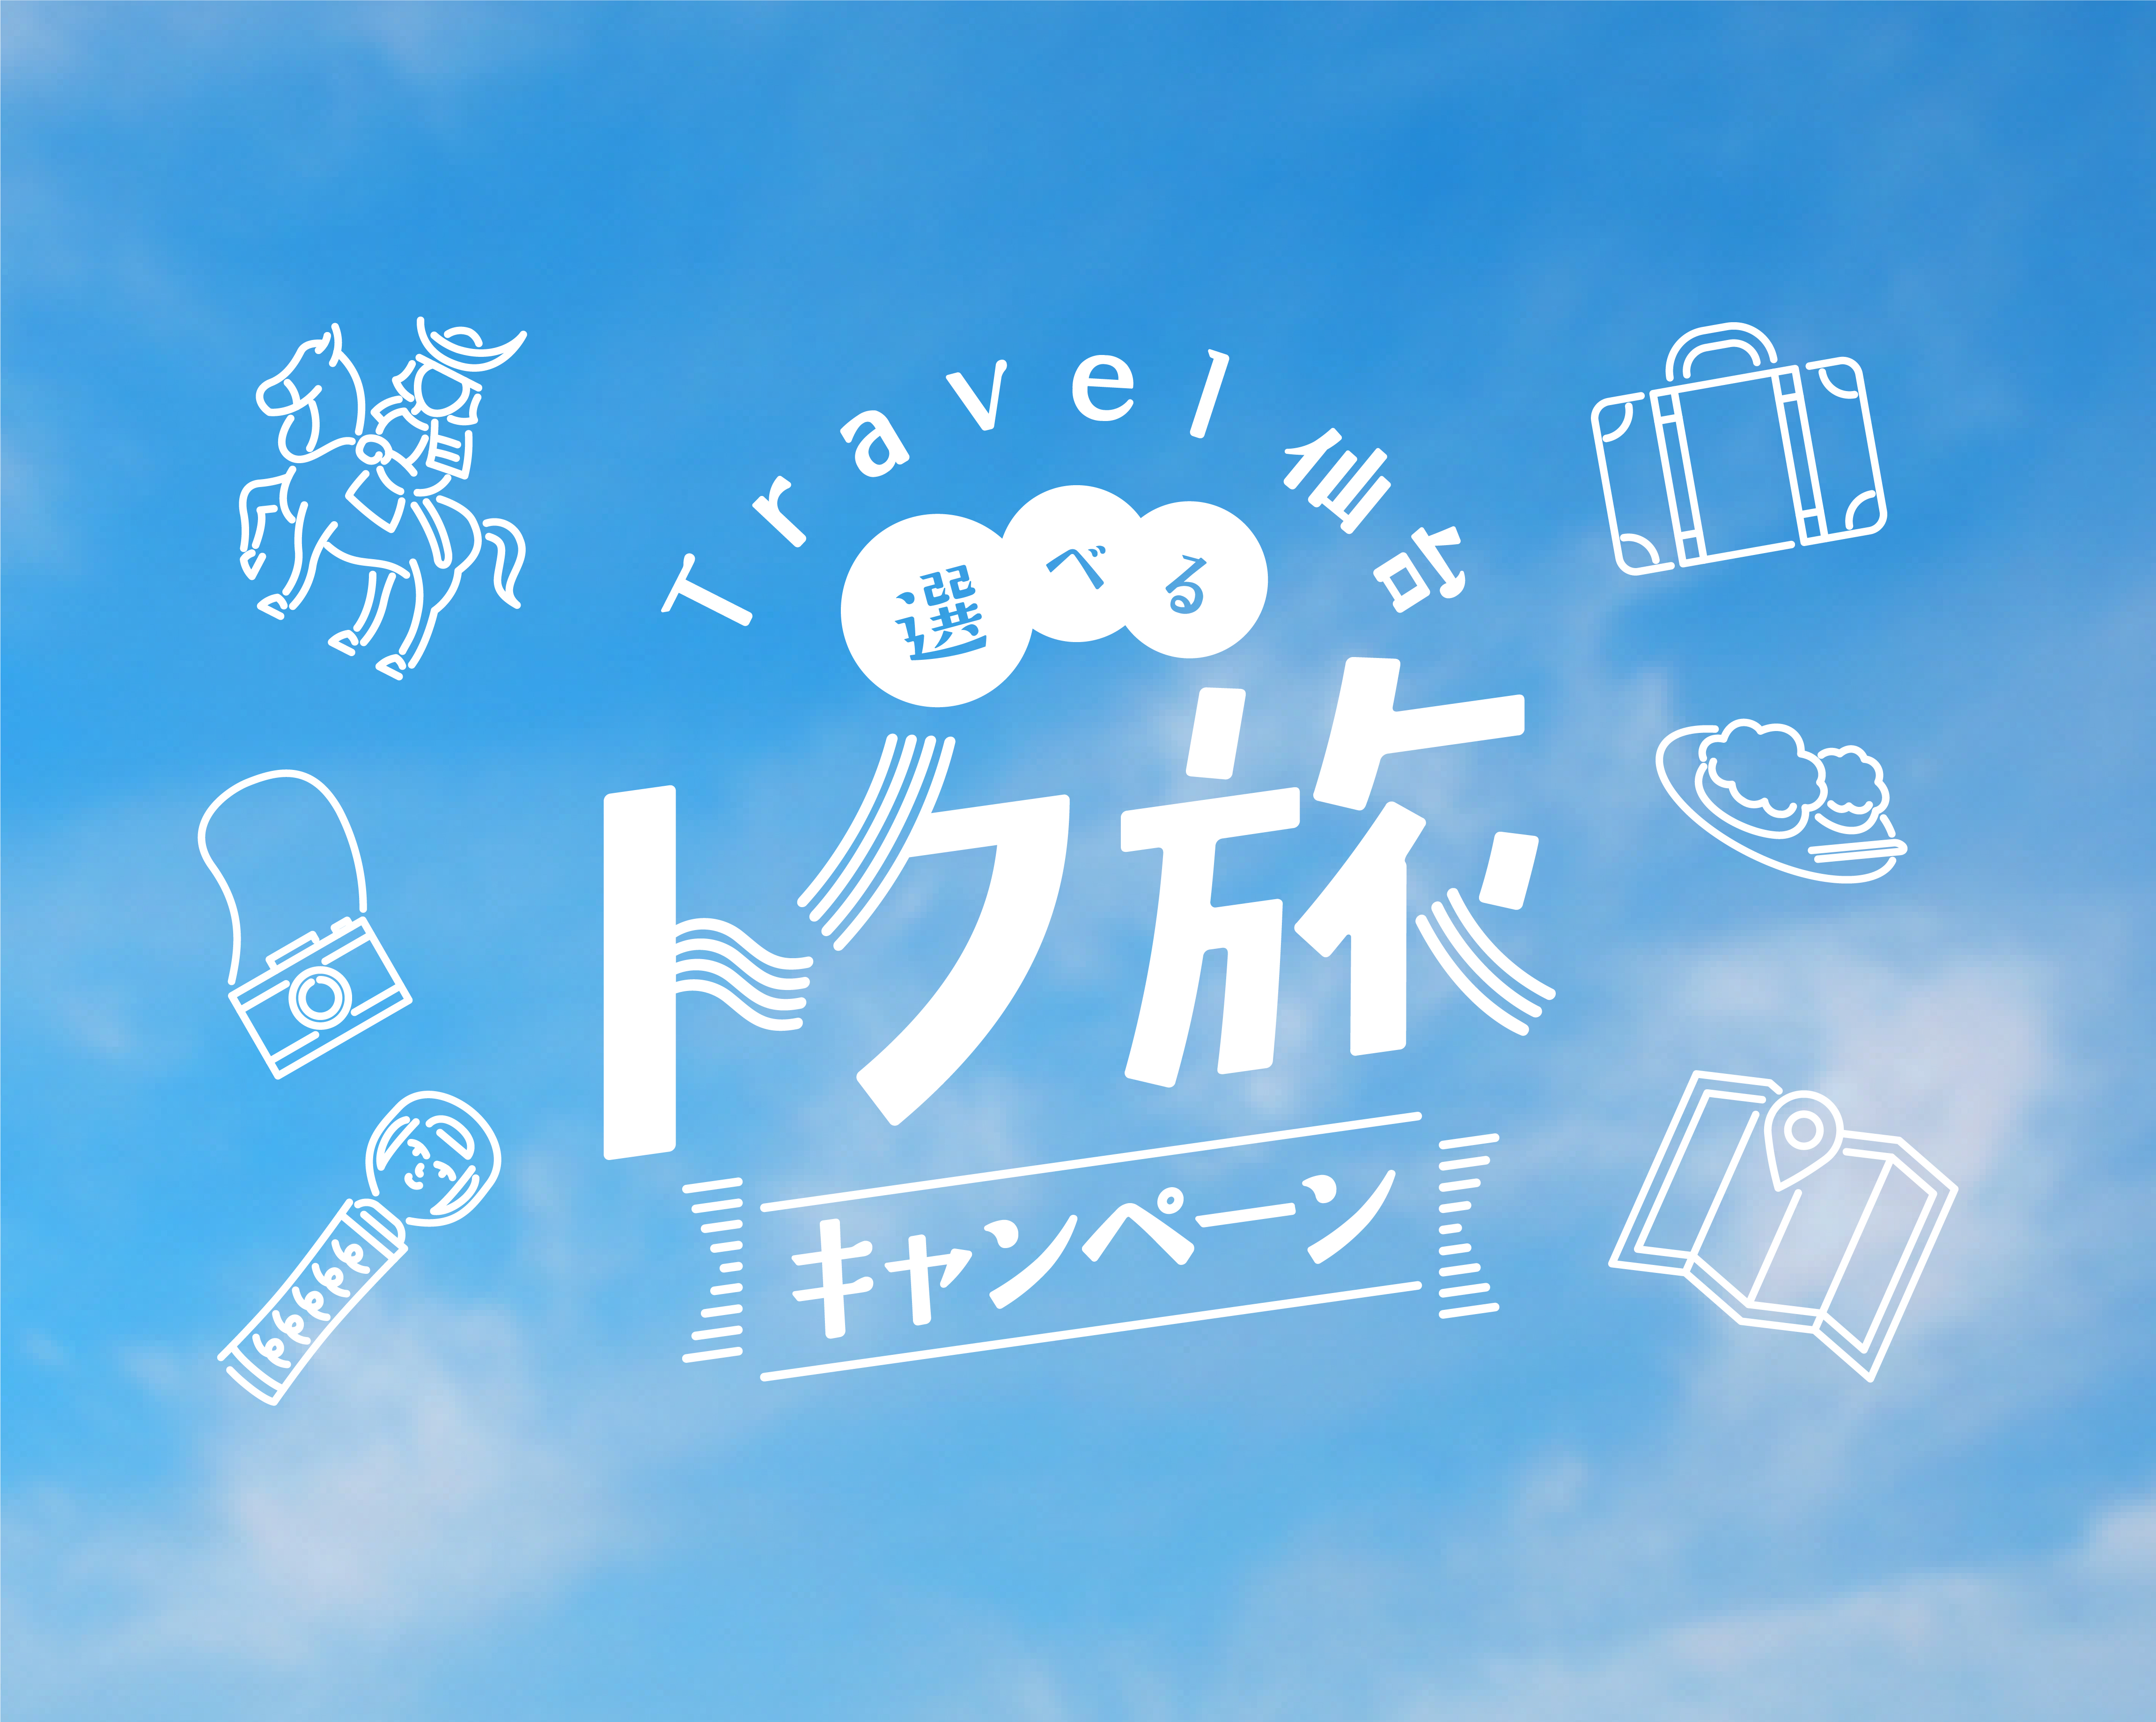 Travel 仙台 選べるトク旅キャンペーン